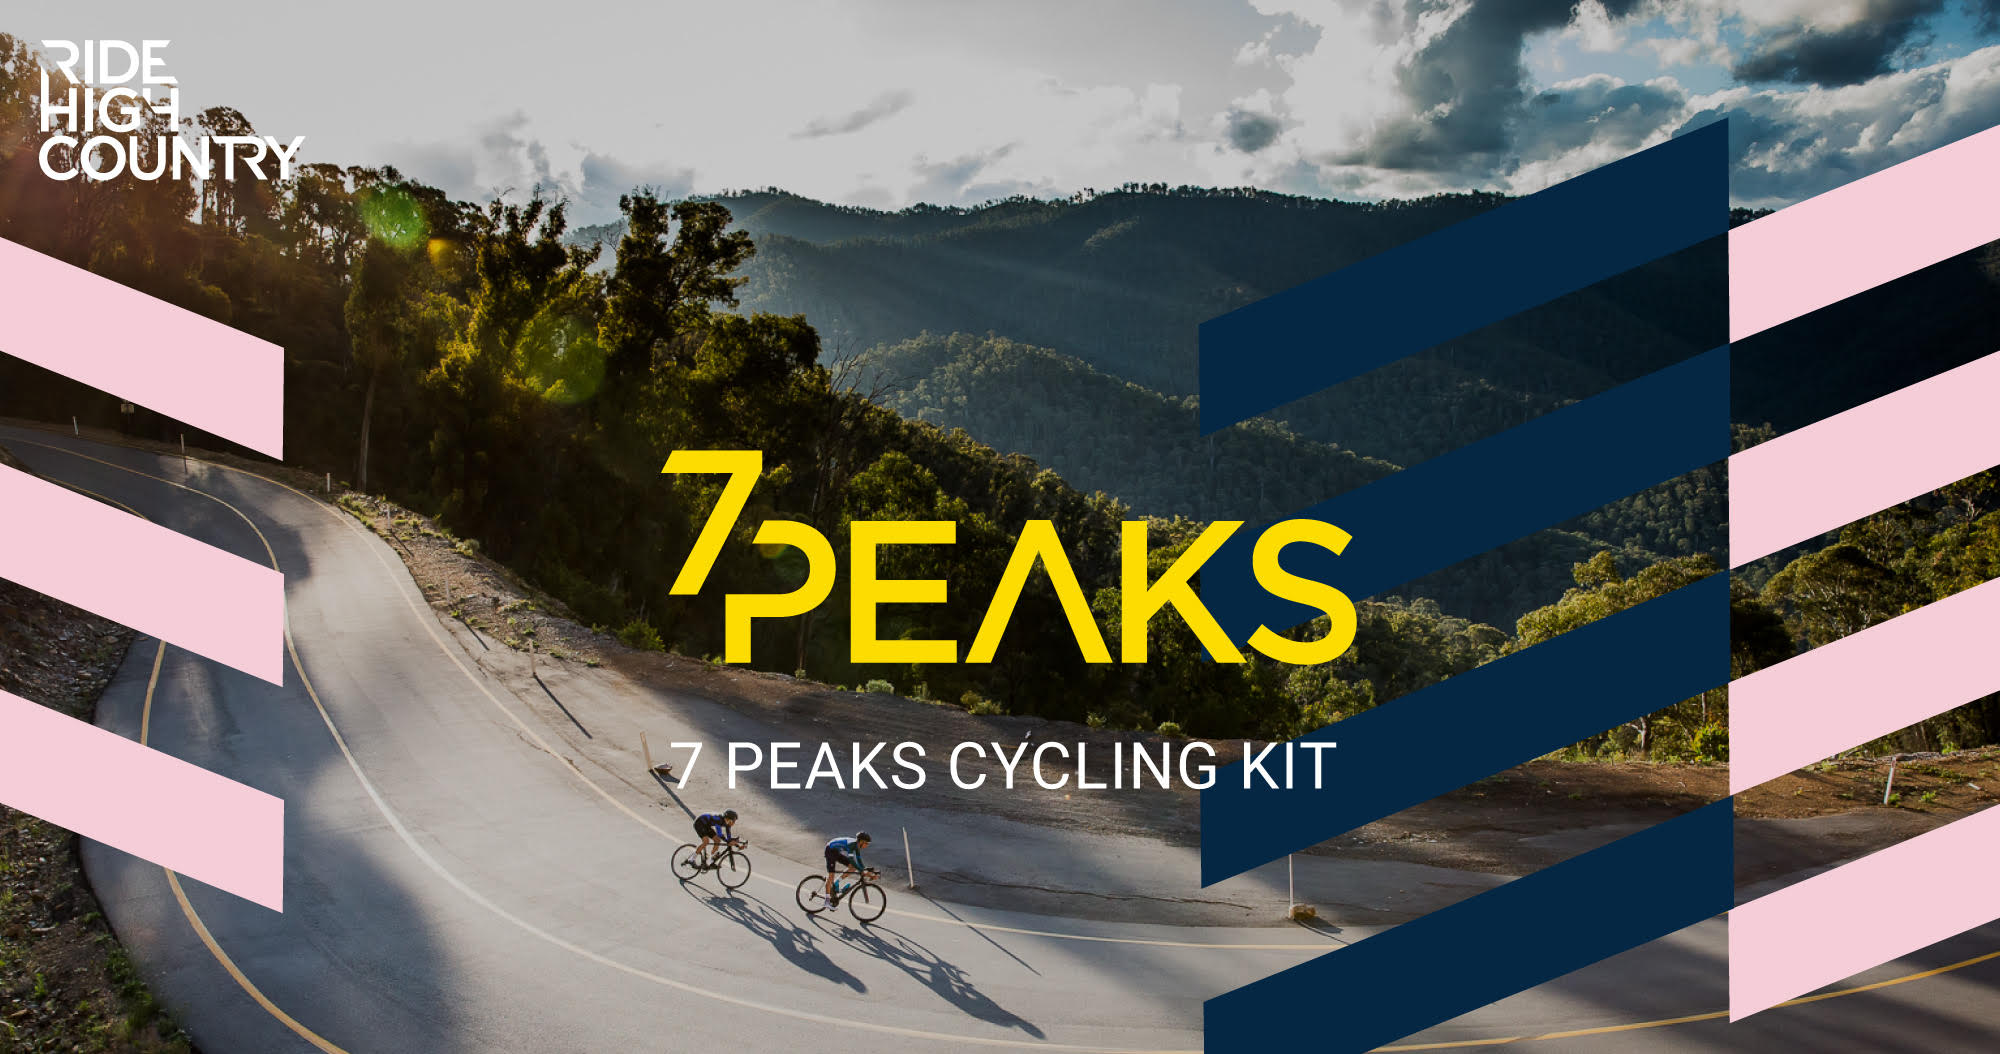 7 Peaks Champions Jersey - Sneak Peak! - Ride High Country